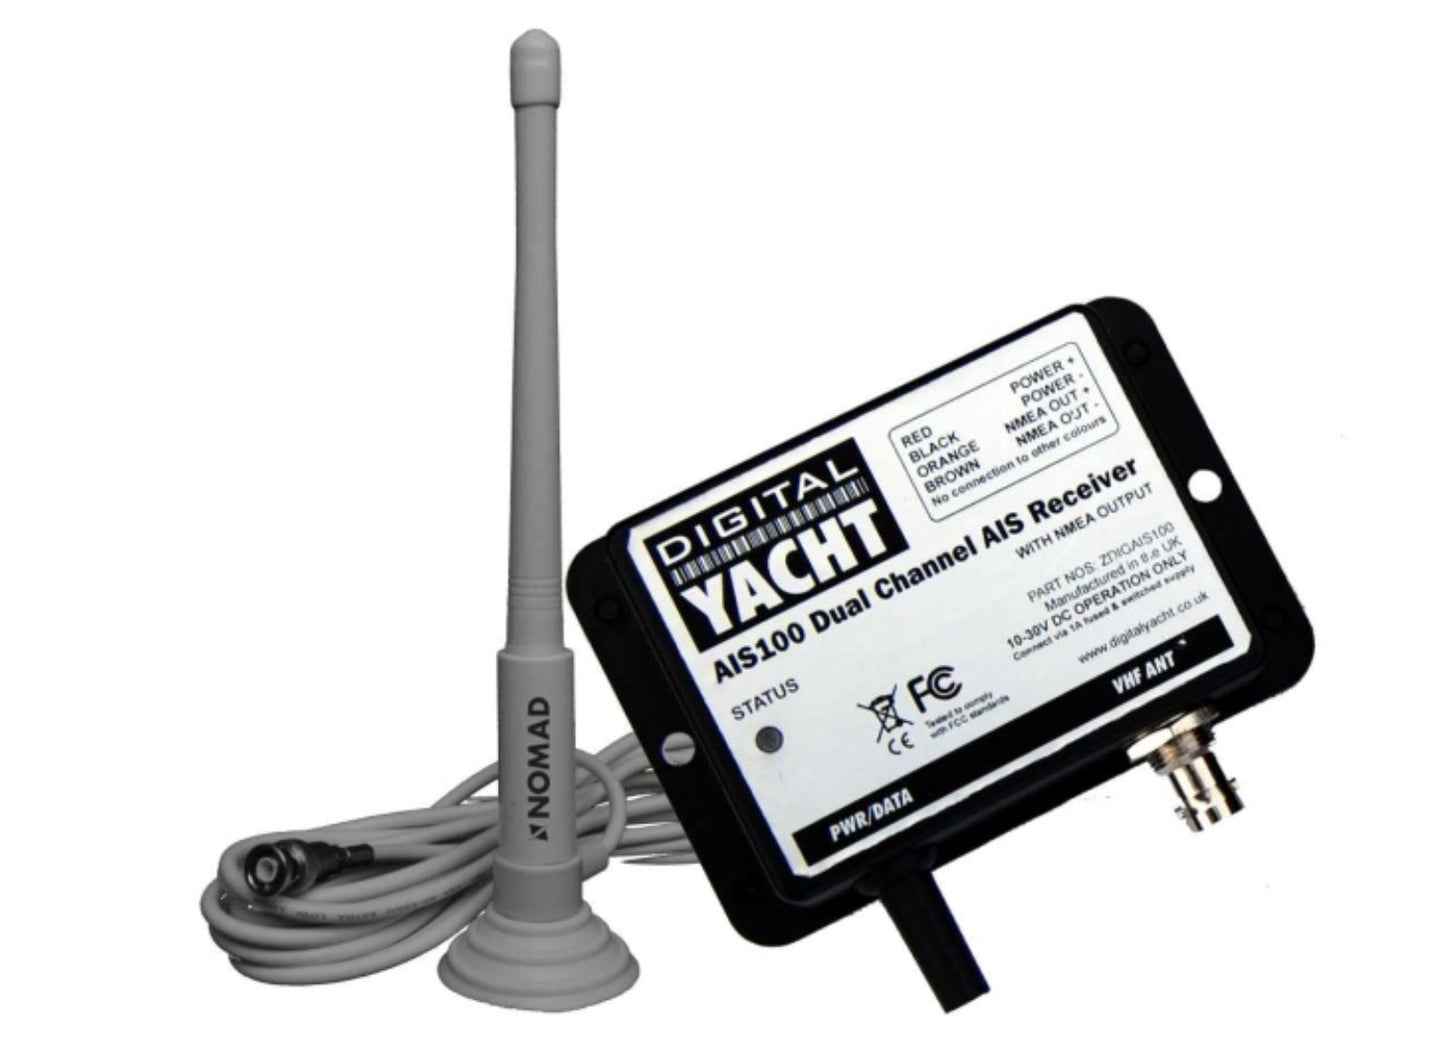 AIS100 Receiver (USB) with QMax Portable VHF Antenna - Digital Yacht